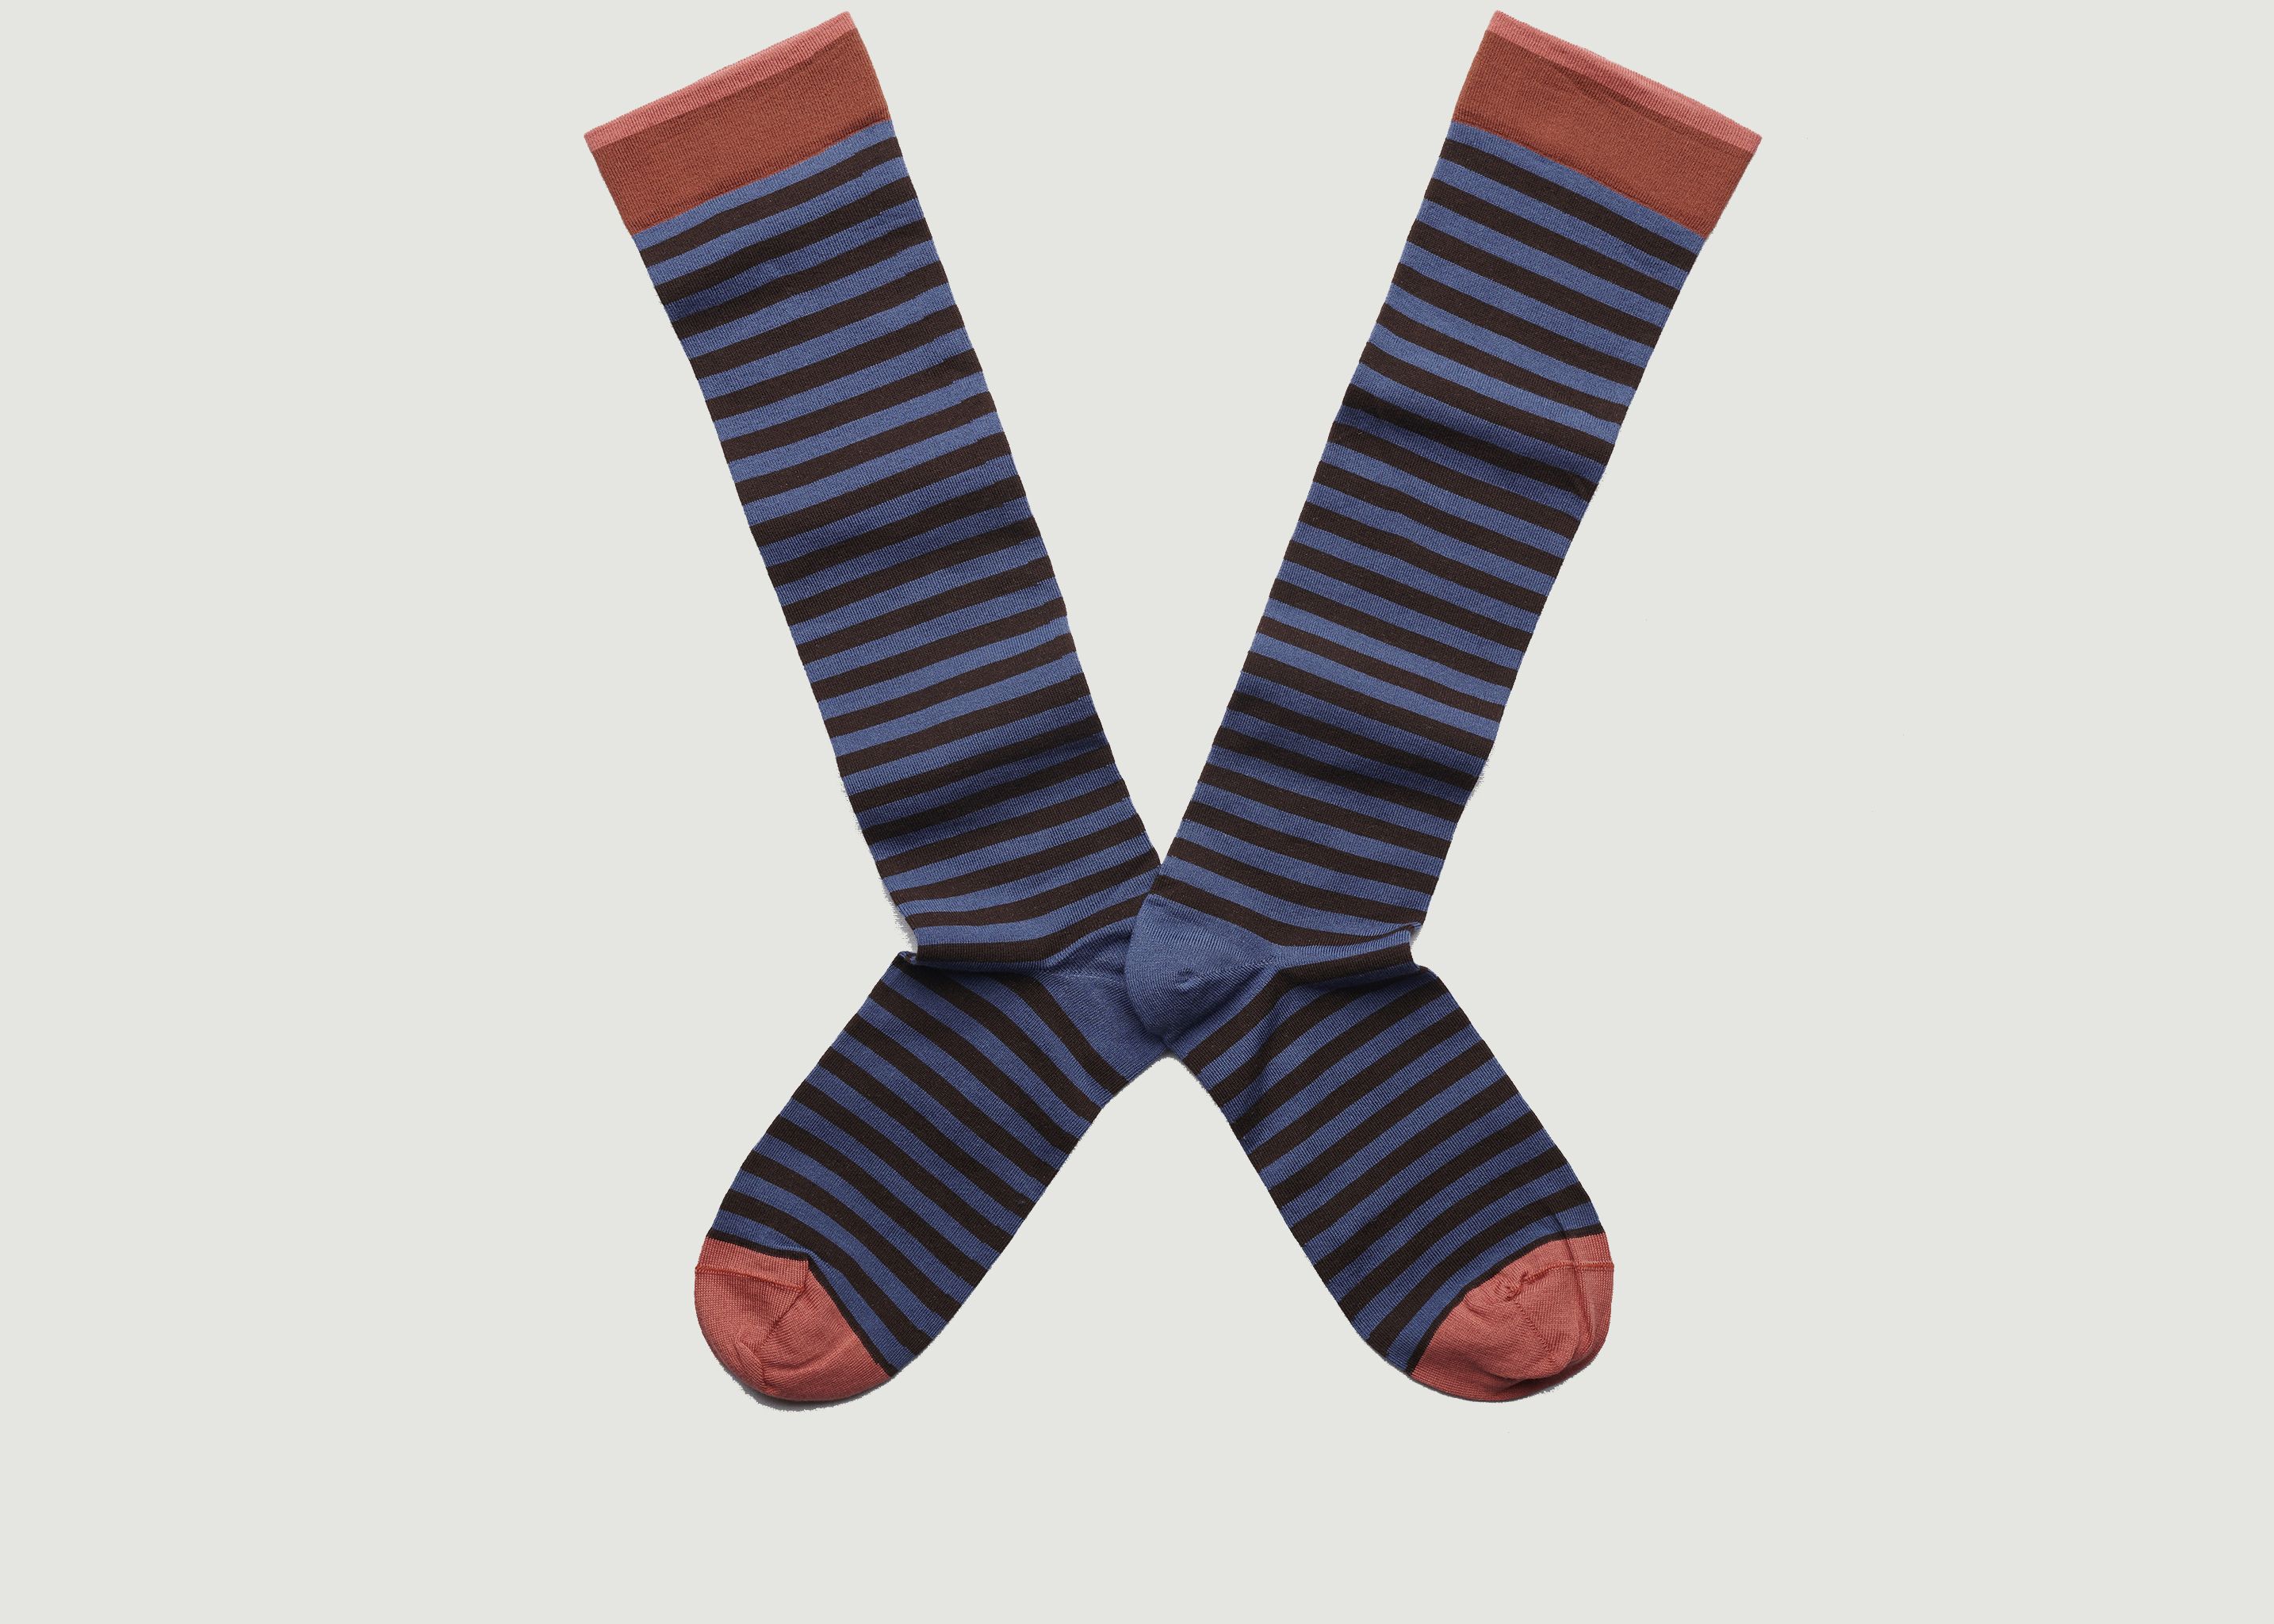 Striped knee-high socks with contrasting edges - Bonne Maison